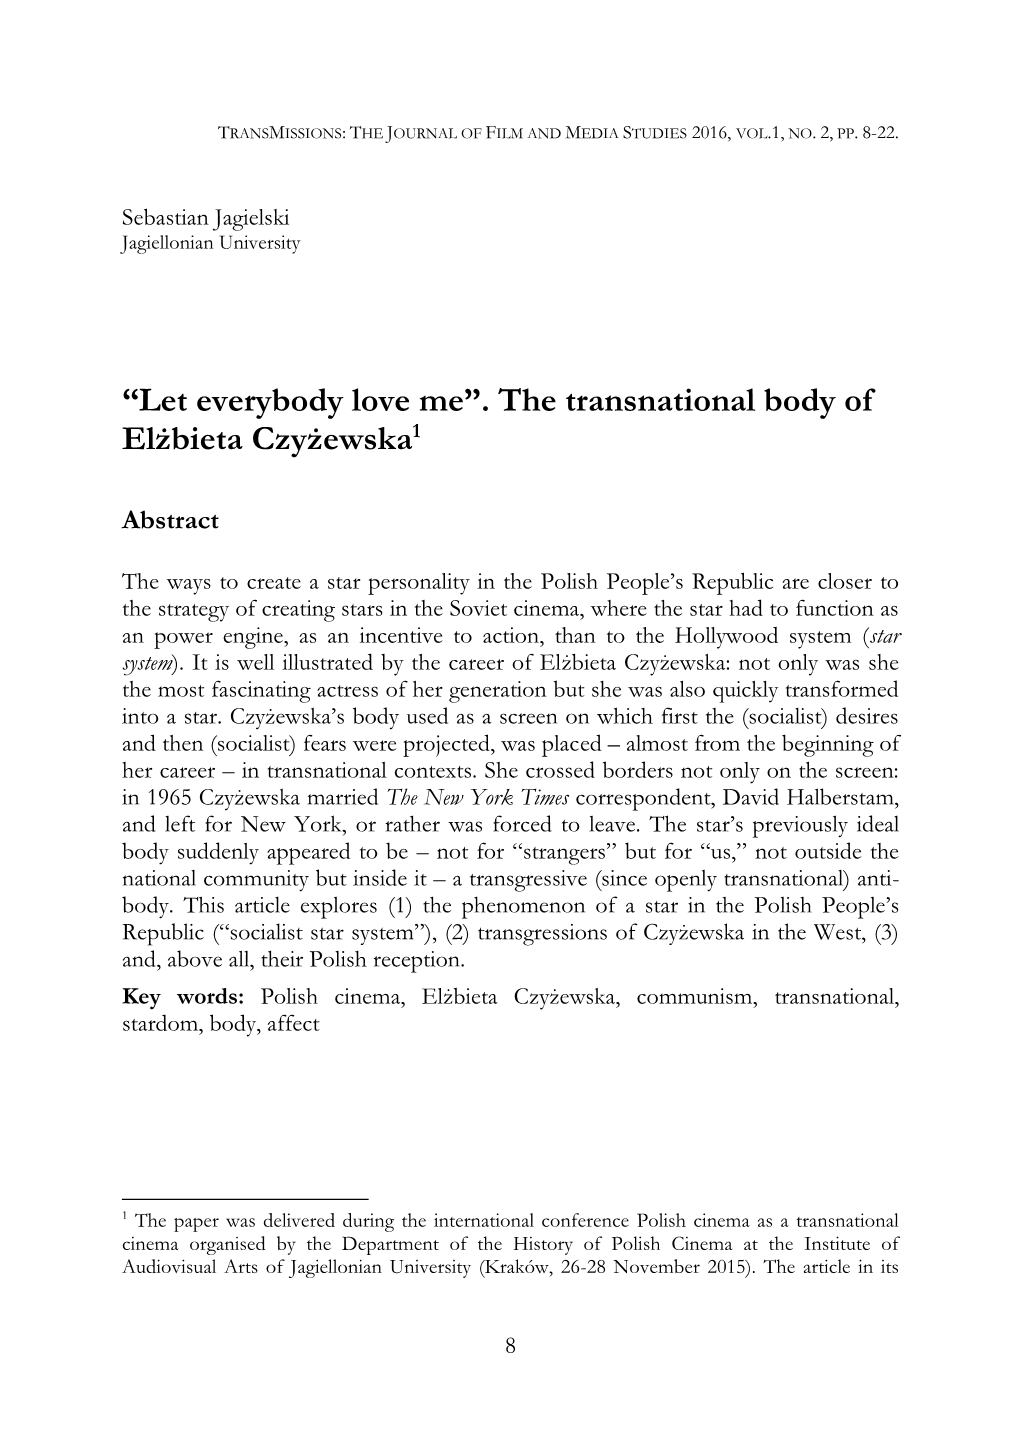 "Let Everybody Love Me". the Transnational Body of Elżbieta